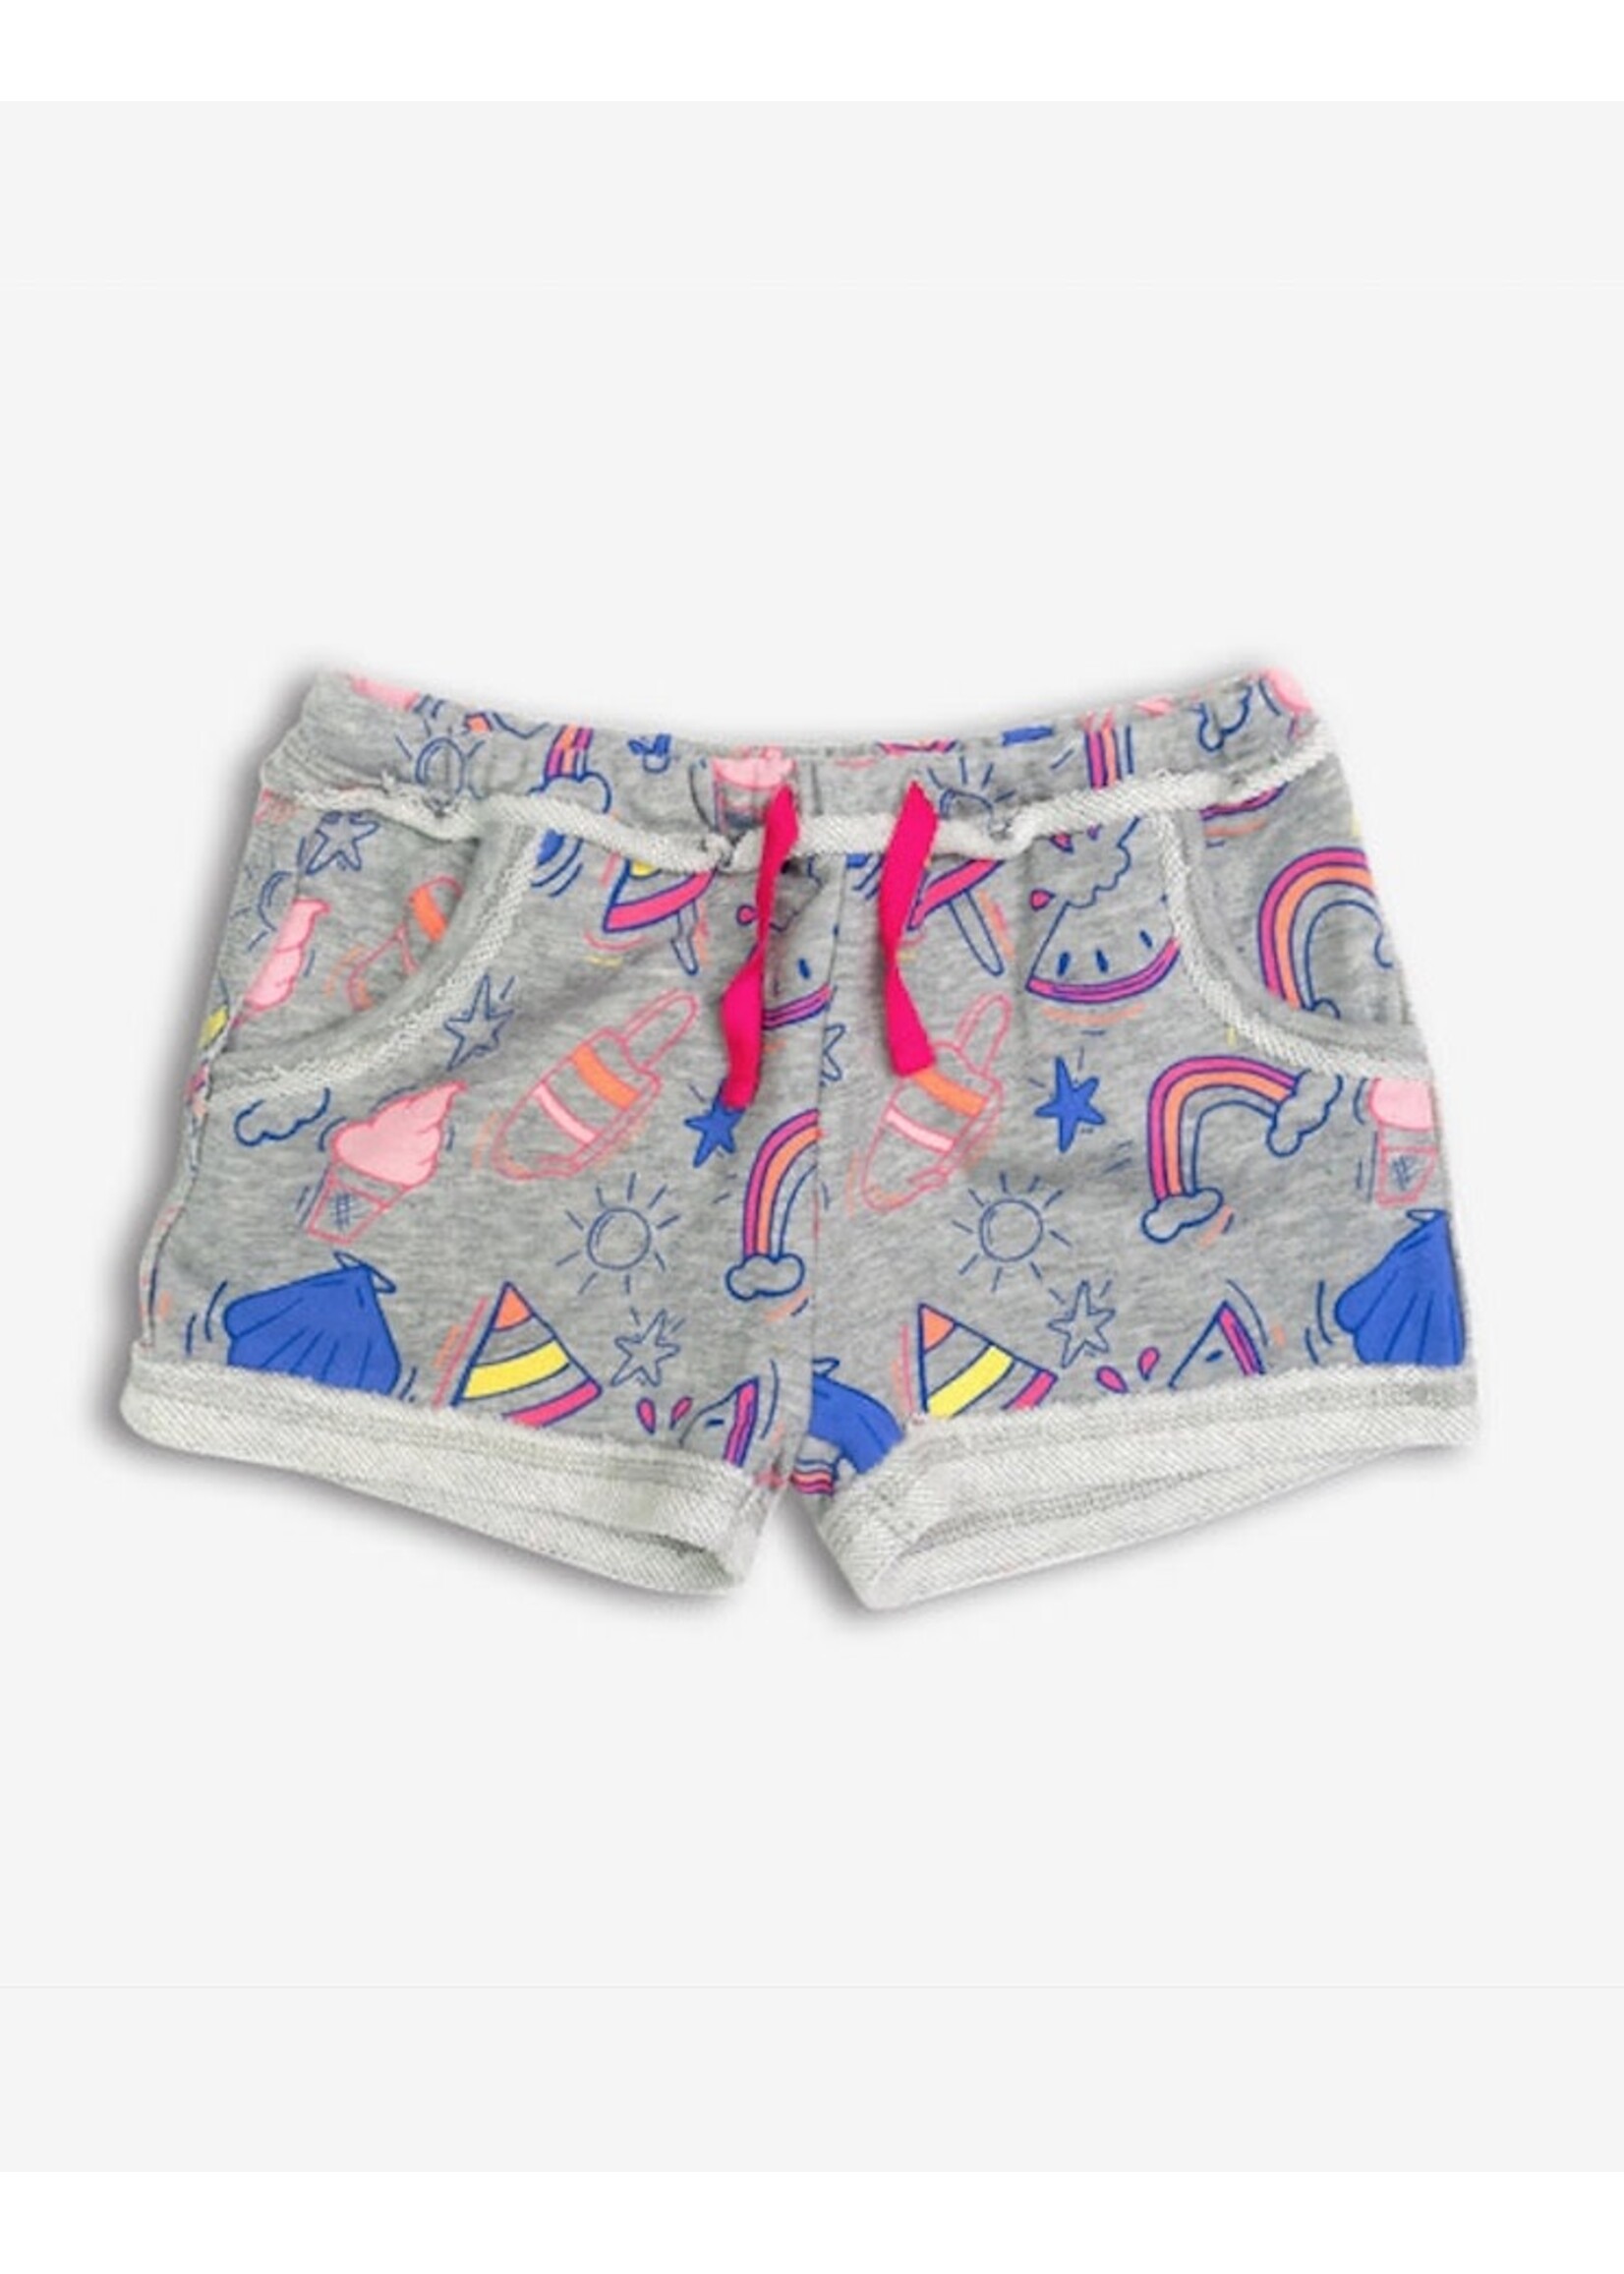 Appaman Appaman, Majorca Shorts || Summer Doodle